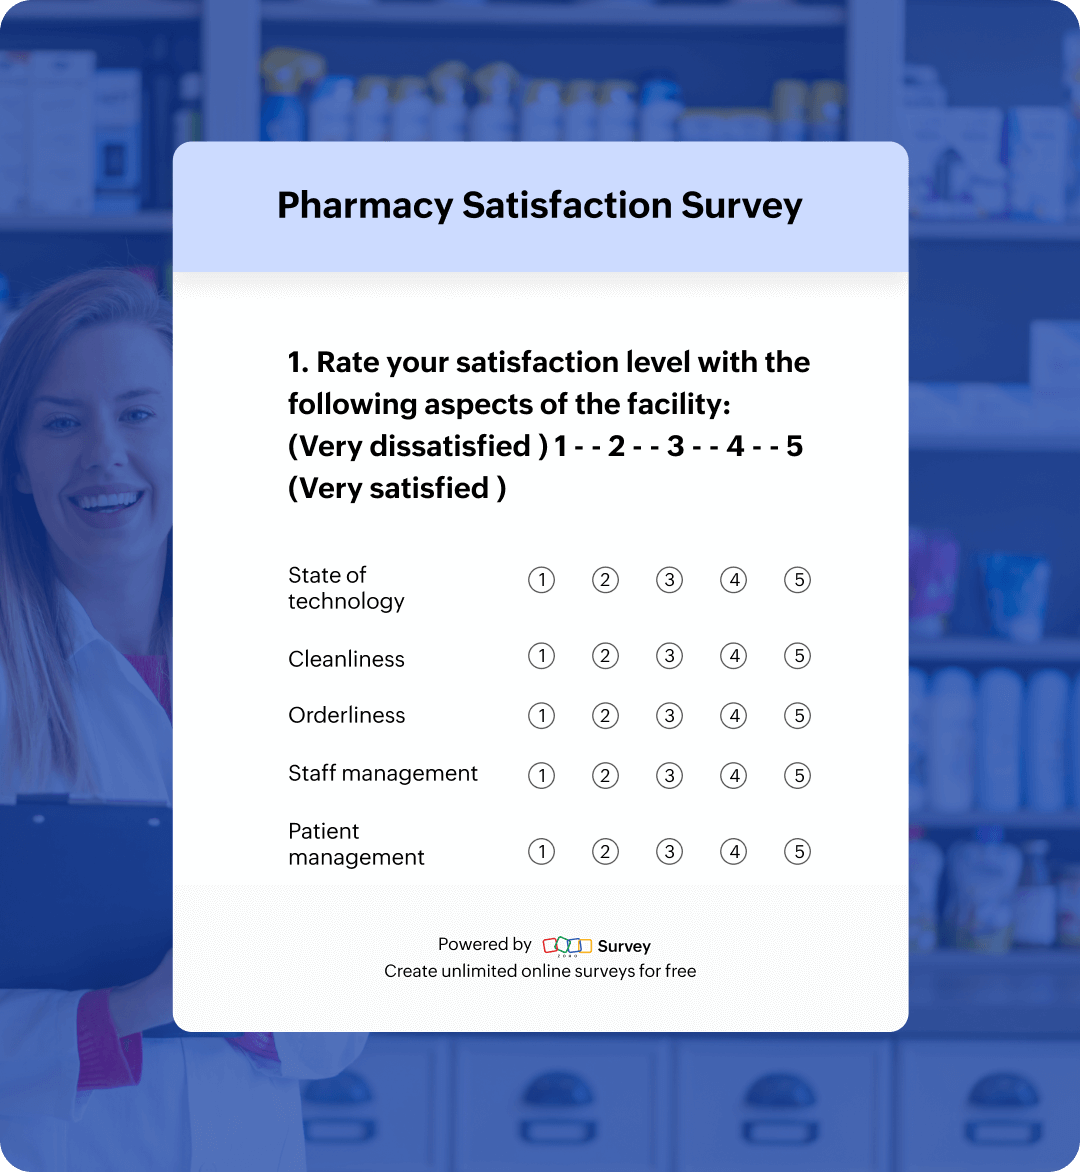 Pharmacy satisfaction survey questionnaire template